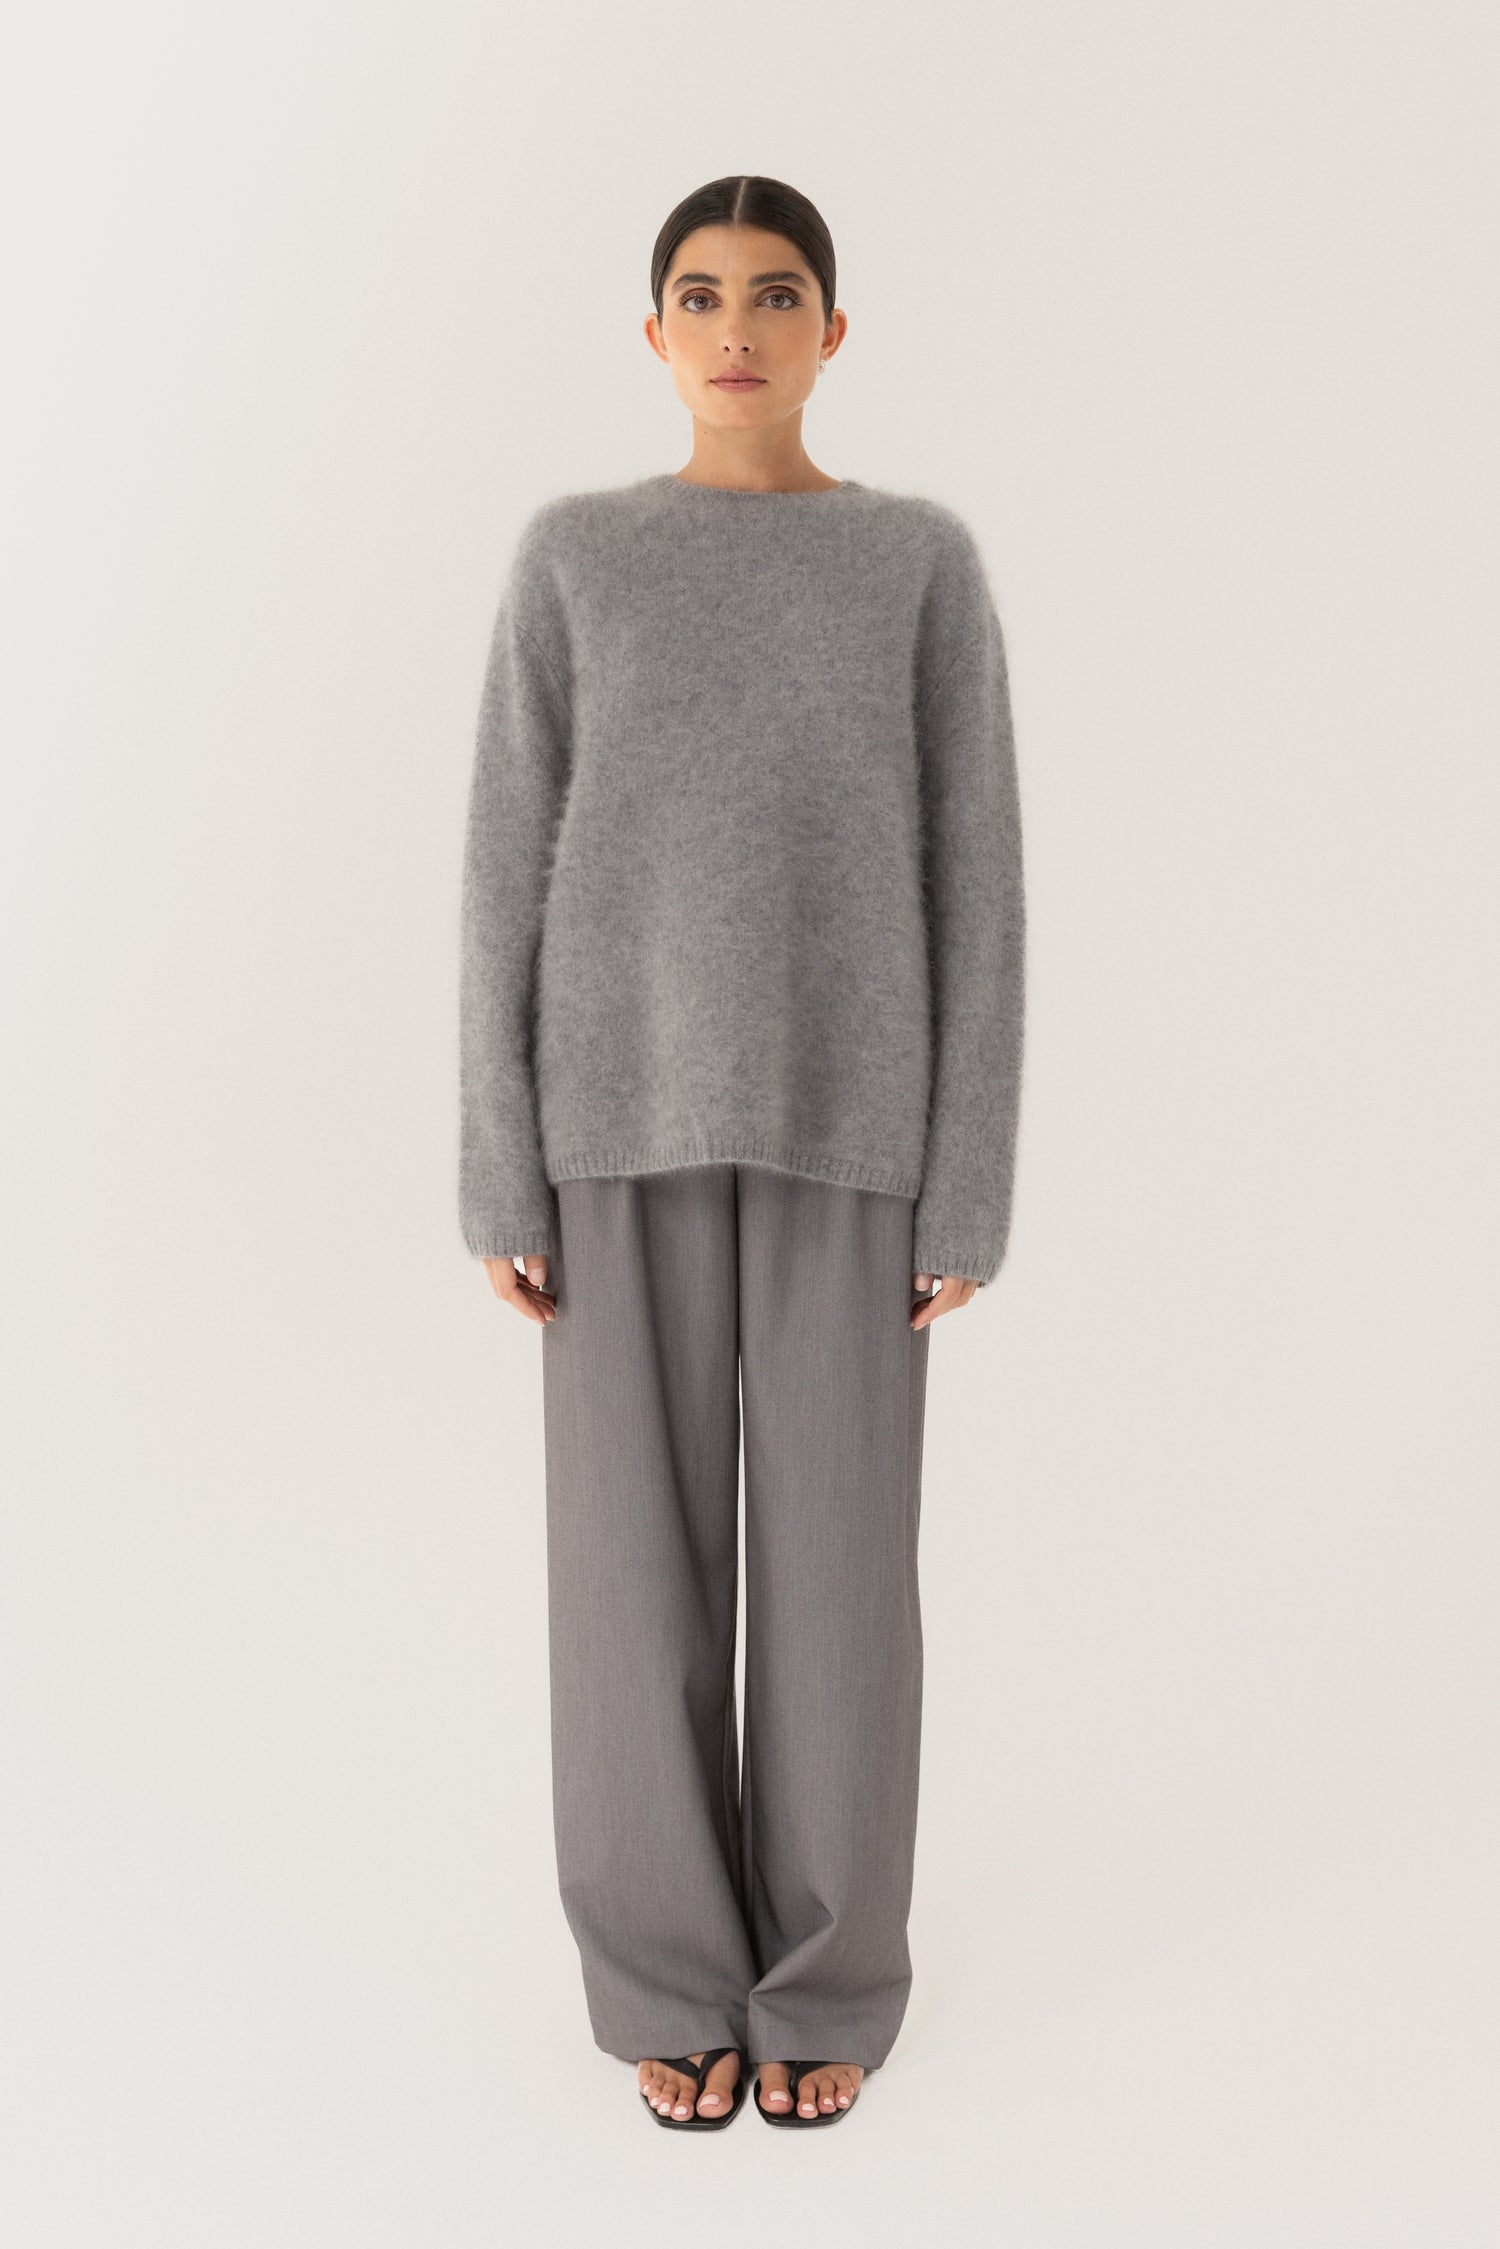 Floy Cashmere Sweater, grey – ALMADA LABEL